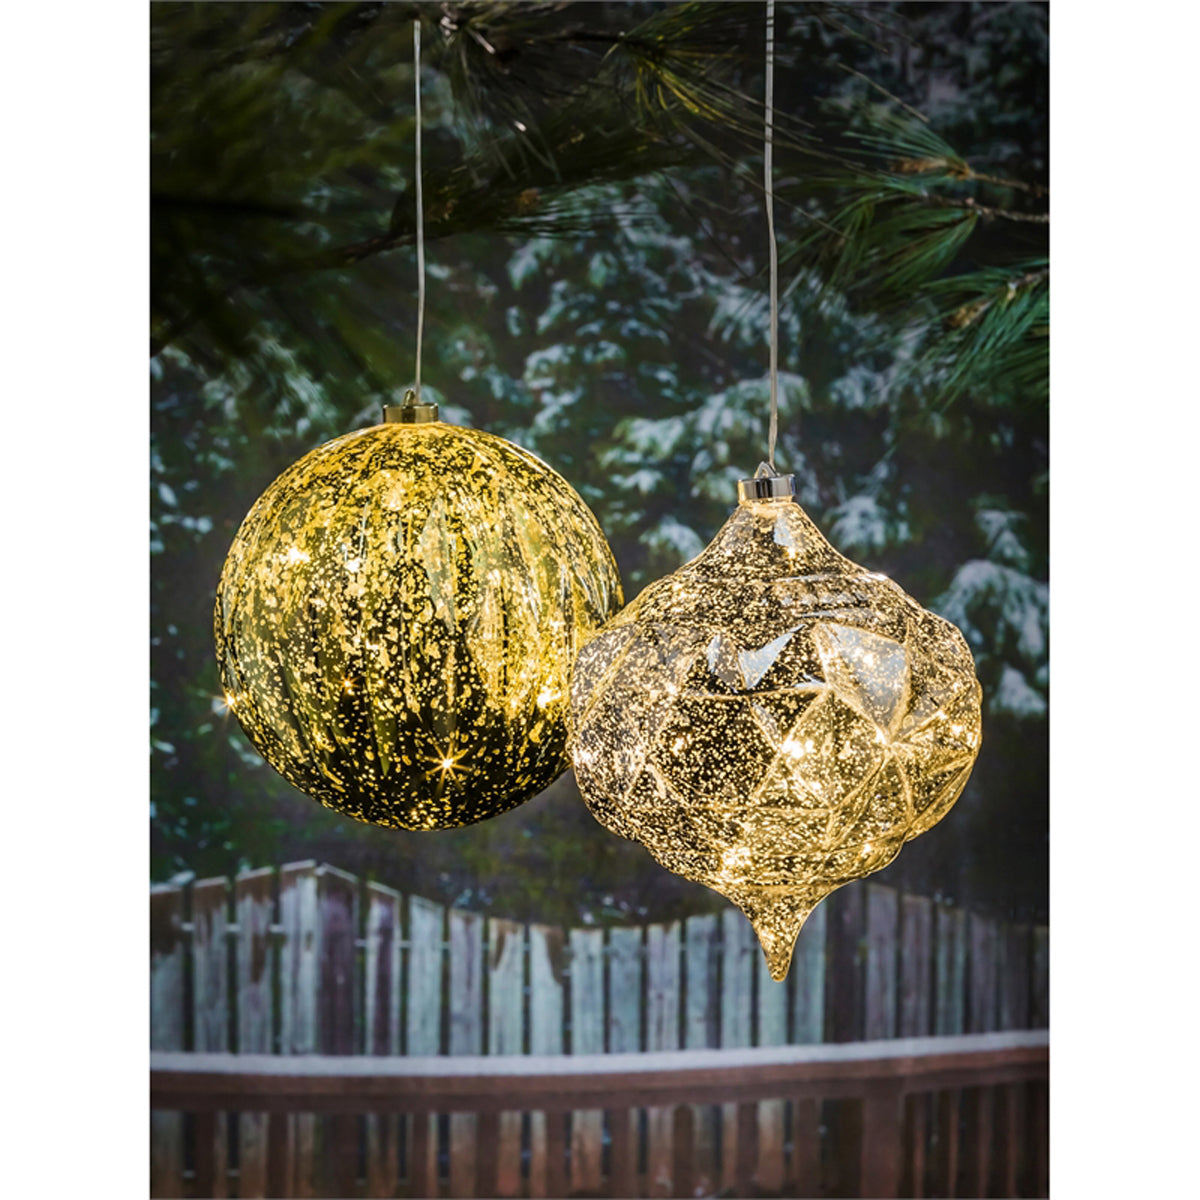 Shatterproof Outdoor LED Ornament 8"